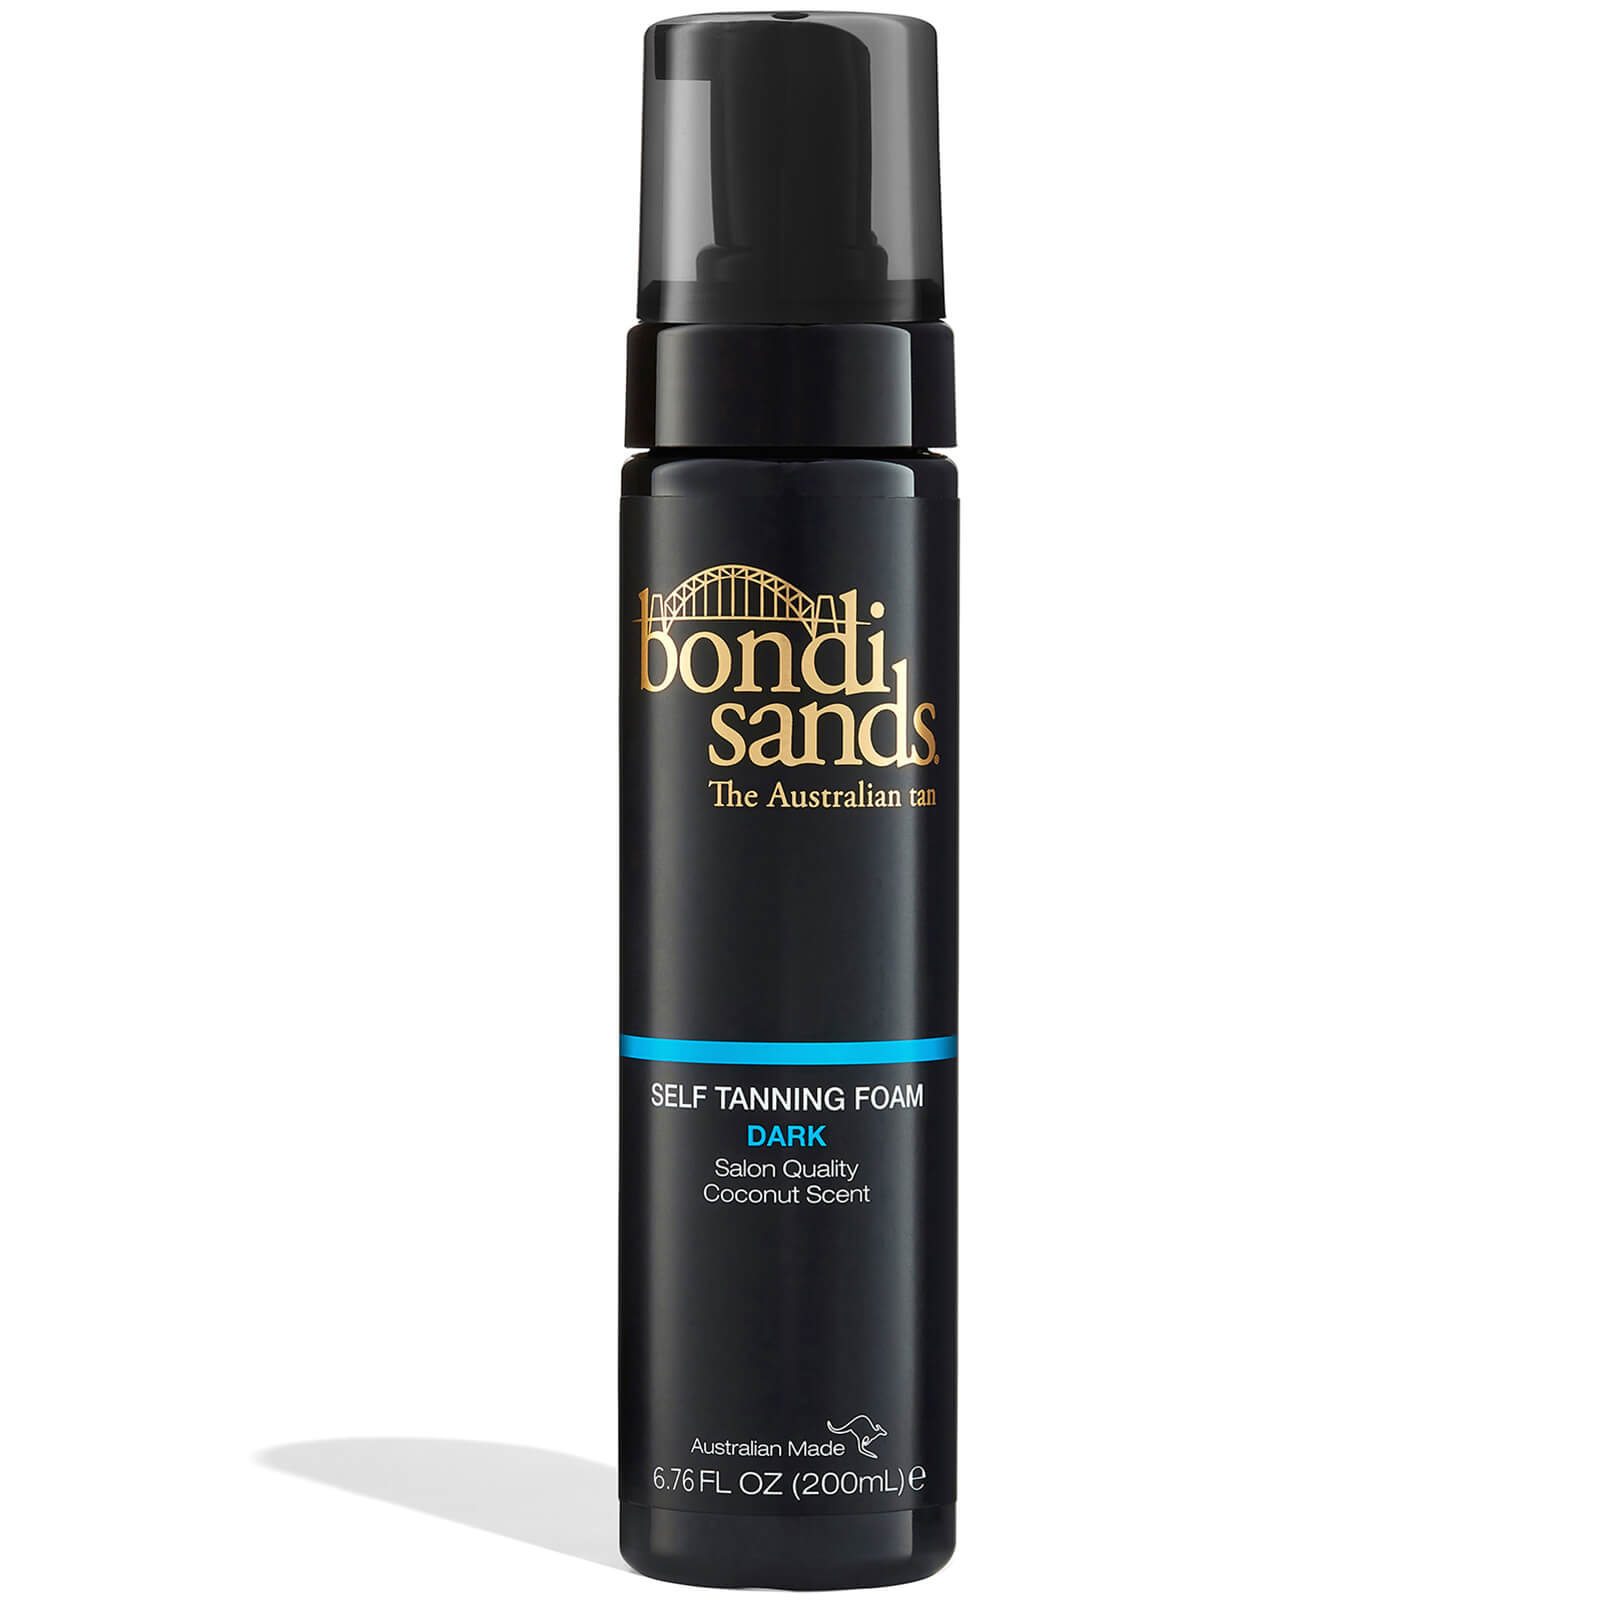 Bondi Sands Self Tanning Foam 200ml - Dark In White